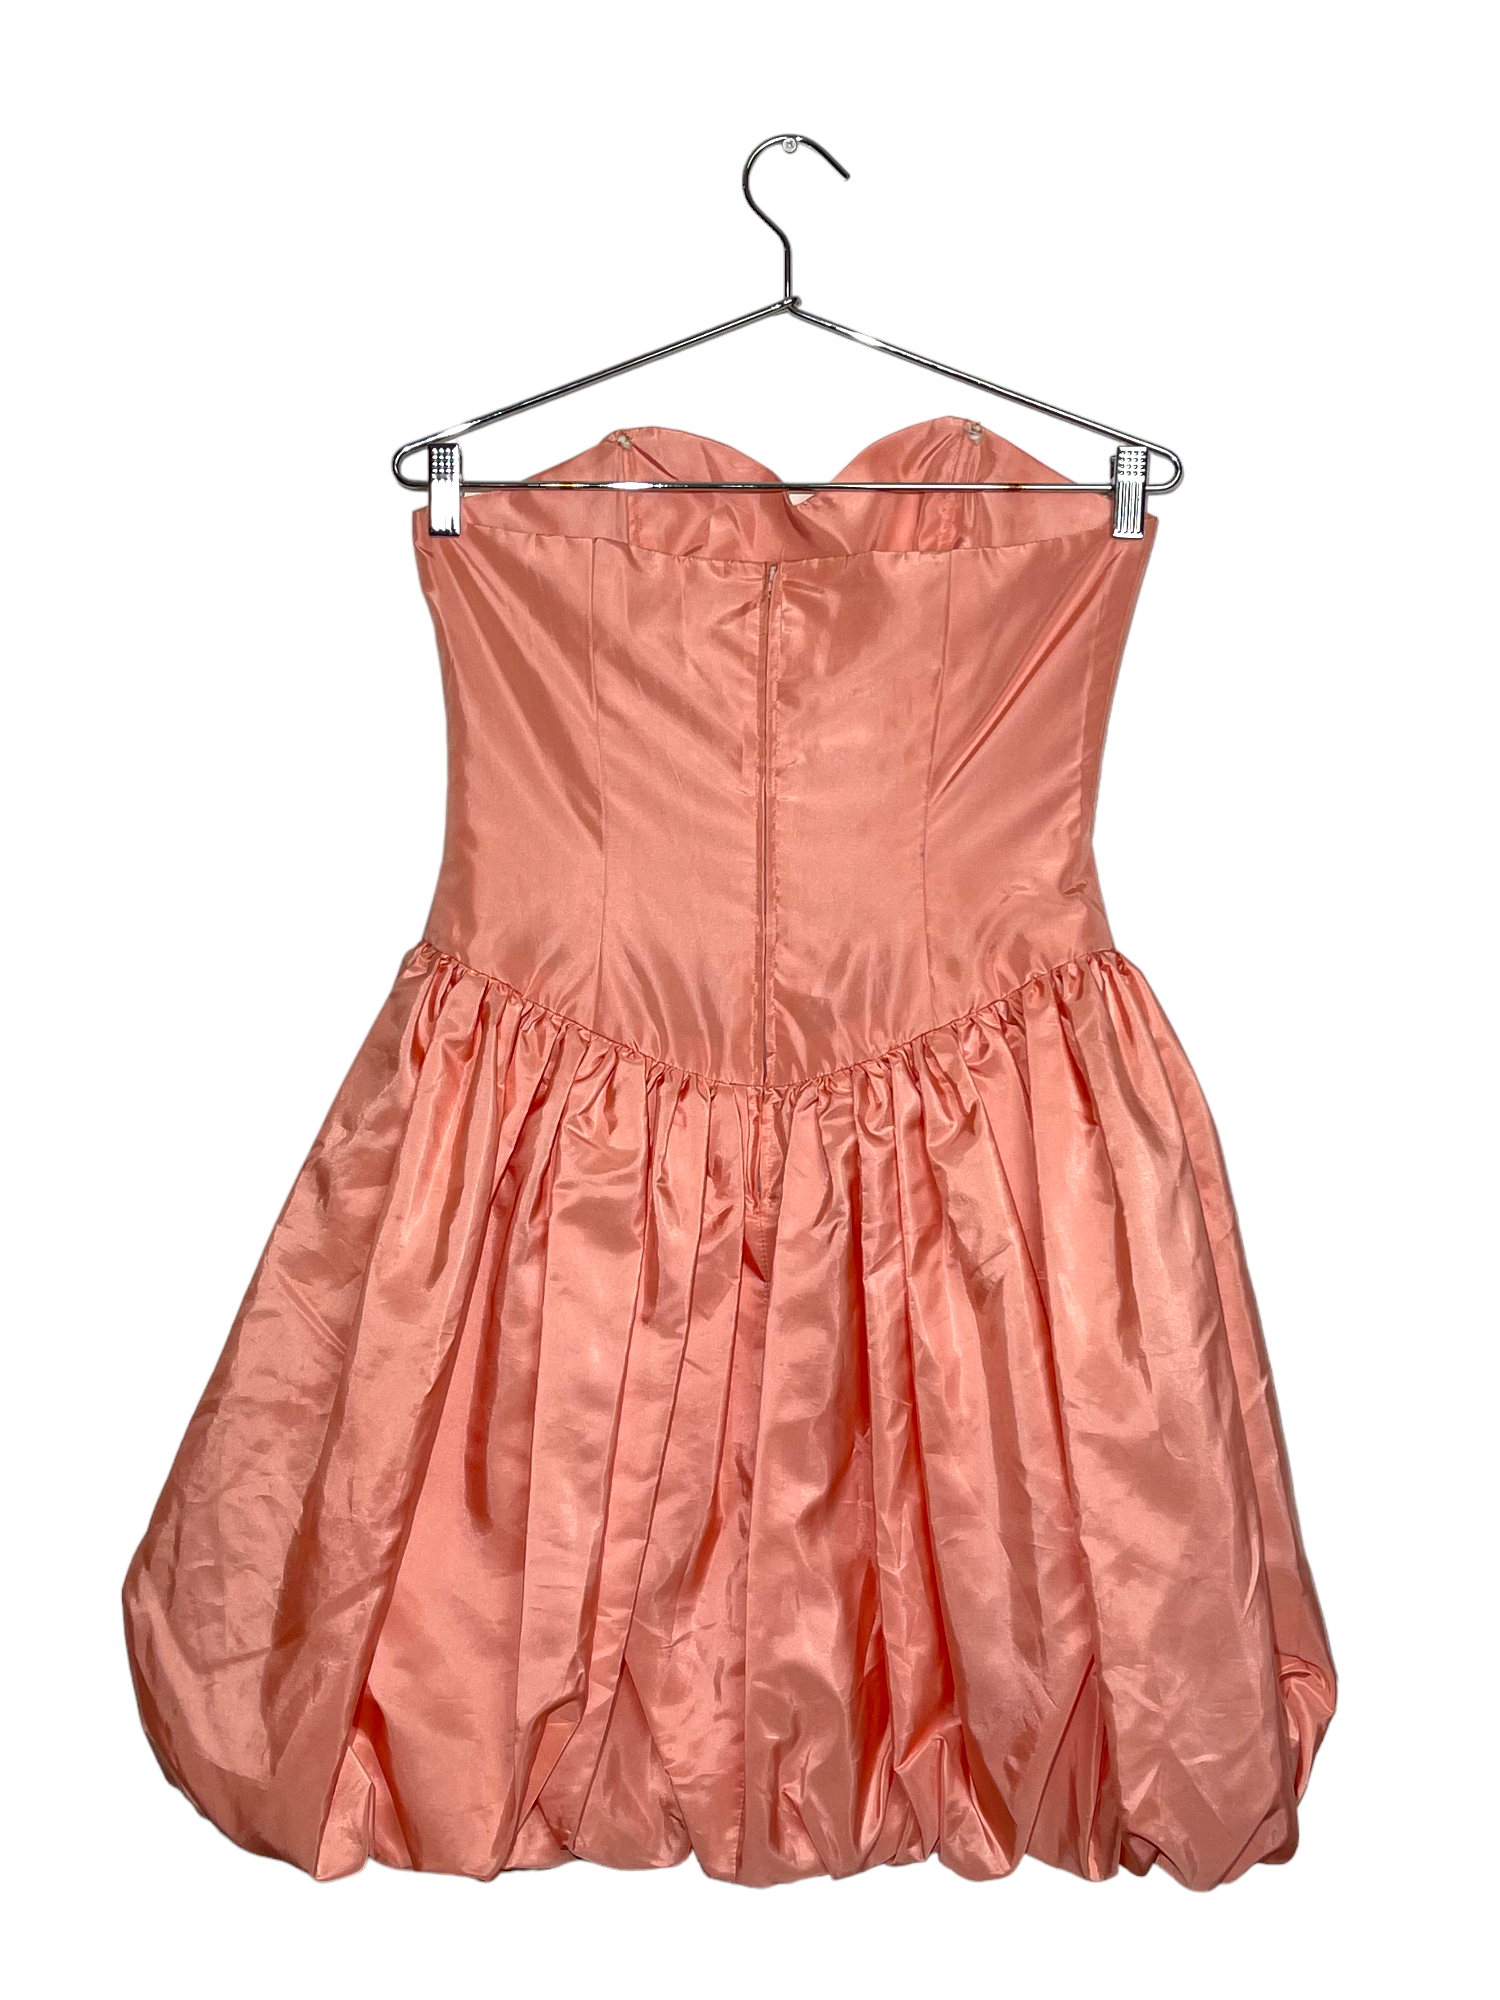 Cupcake Pink Prom Dress